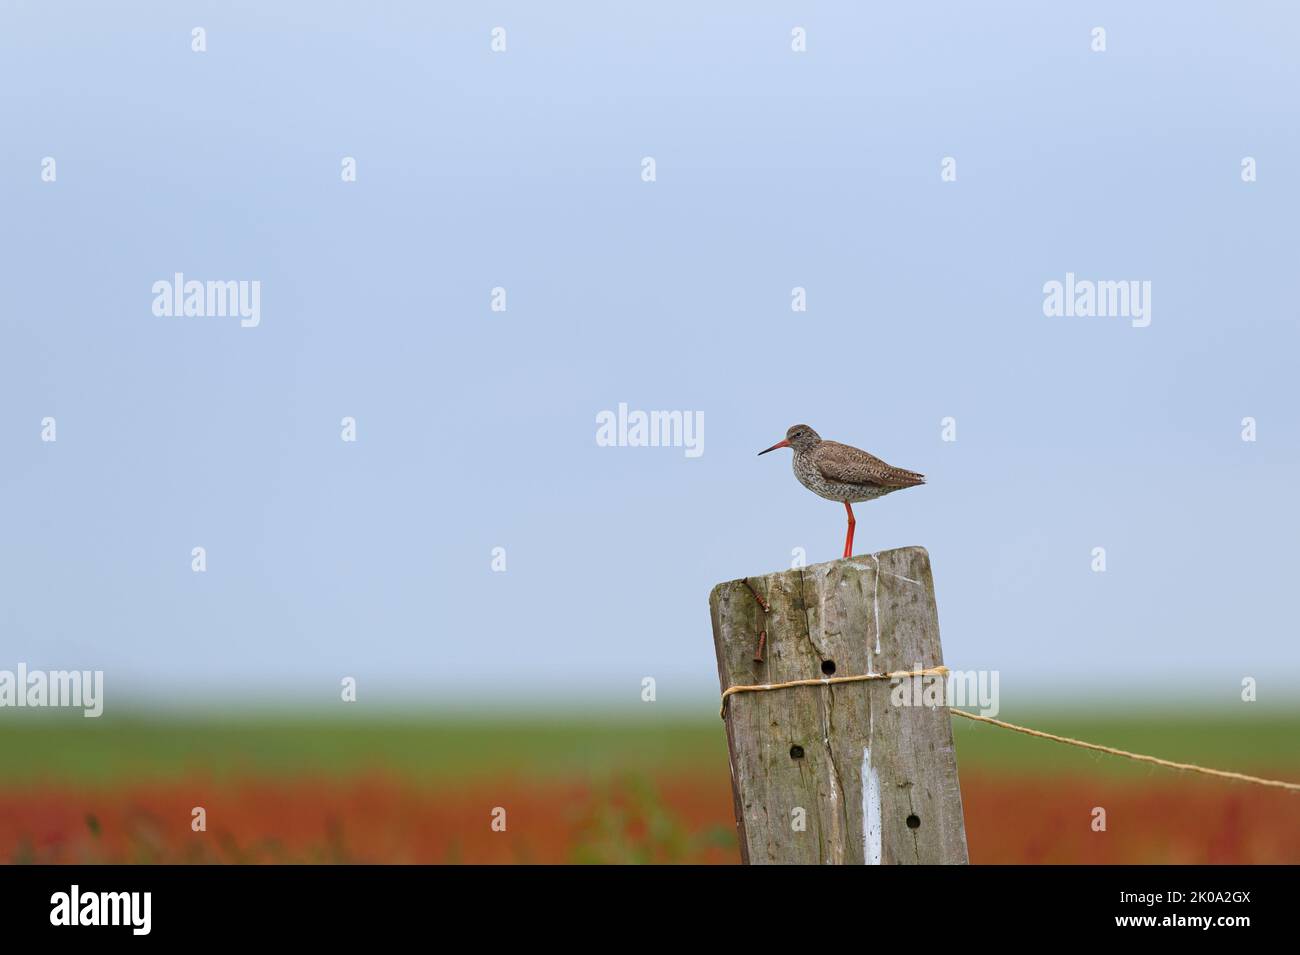 Common Redshank bird on pole Stock Photo